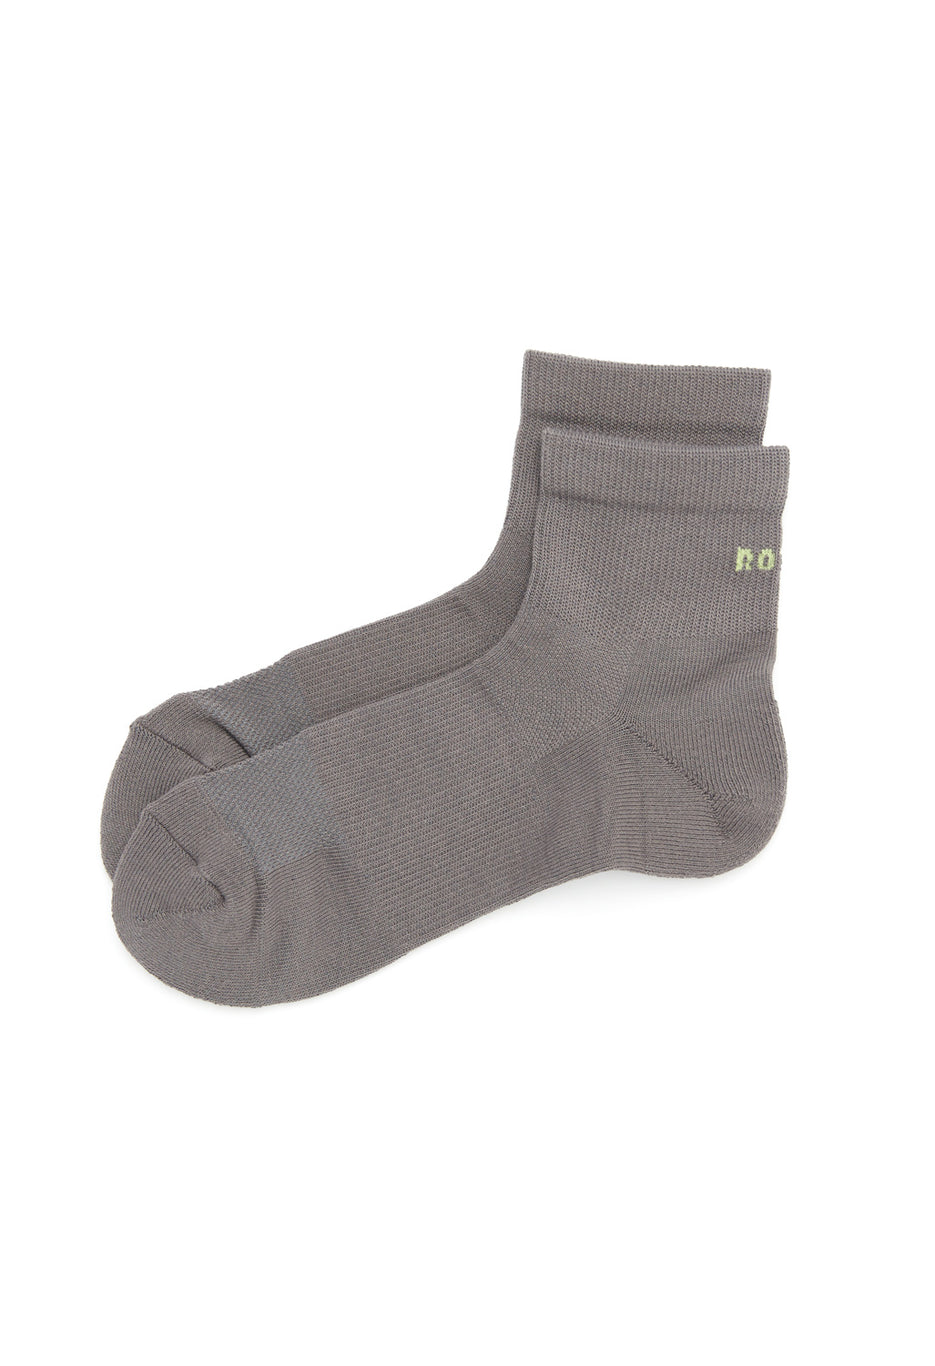 ROTOTO Cordura Sports Ankle Socks - Dark Grey